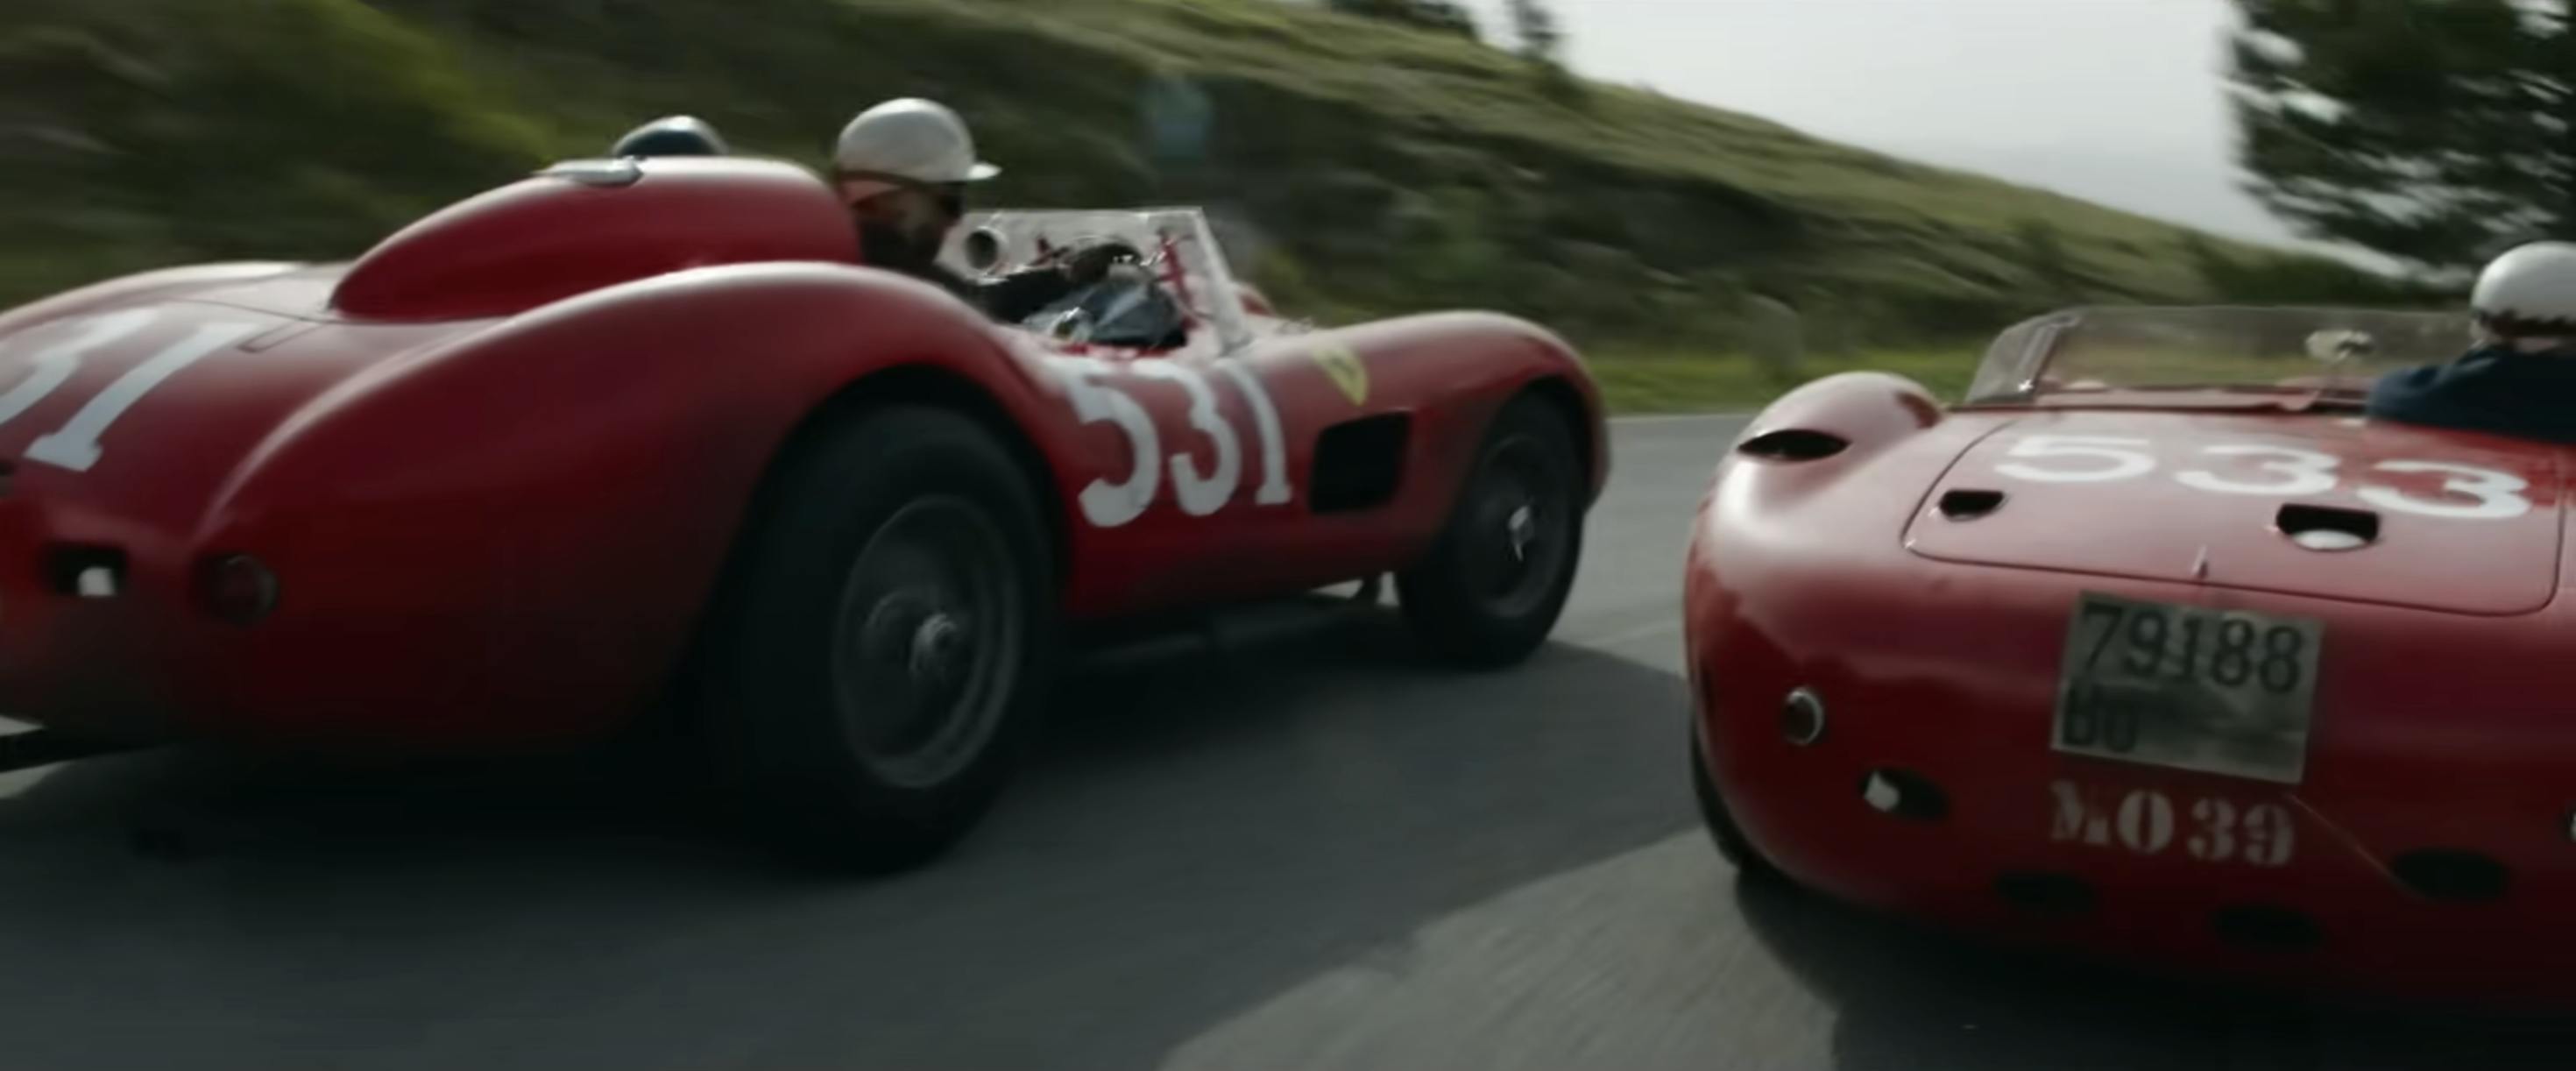 Ferrari film racing action still overtake